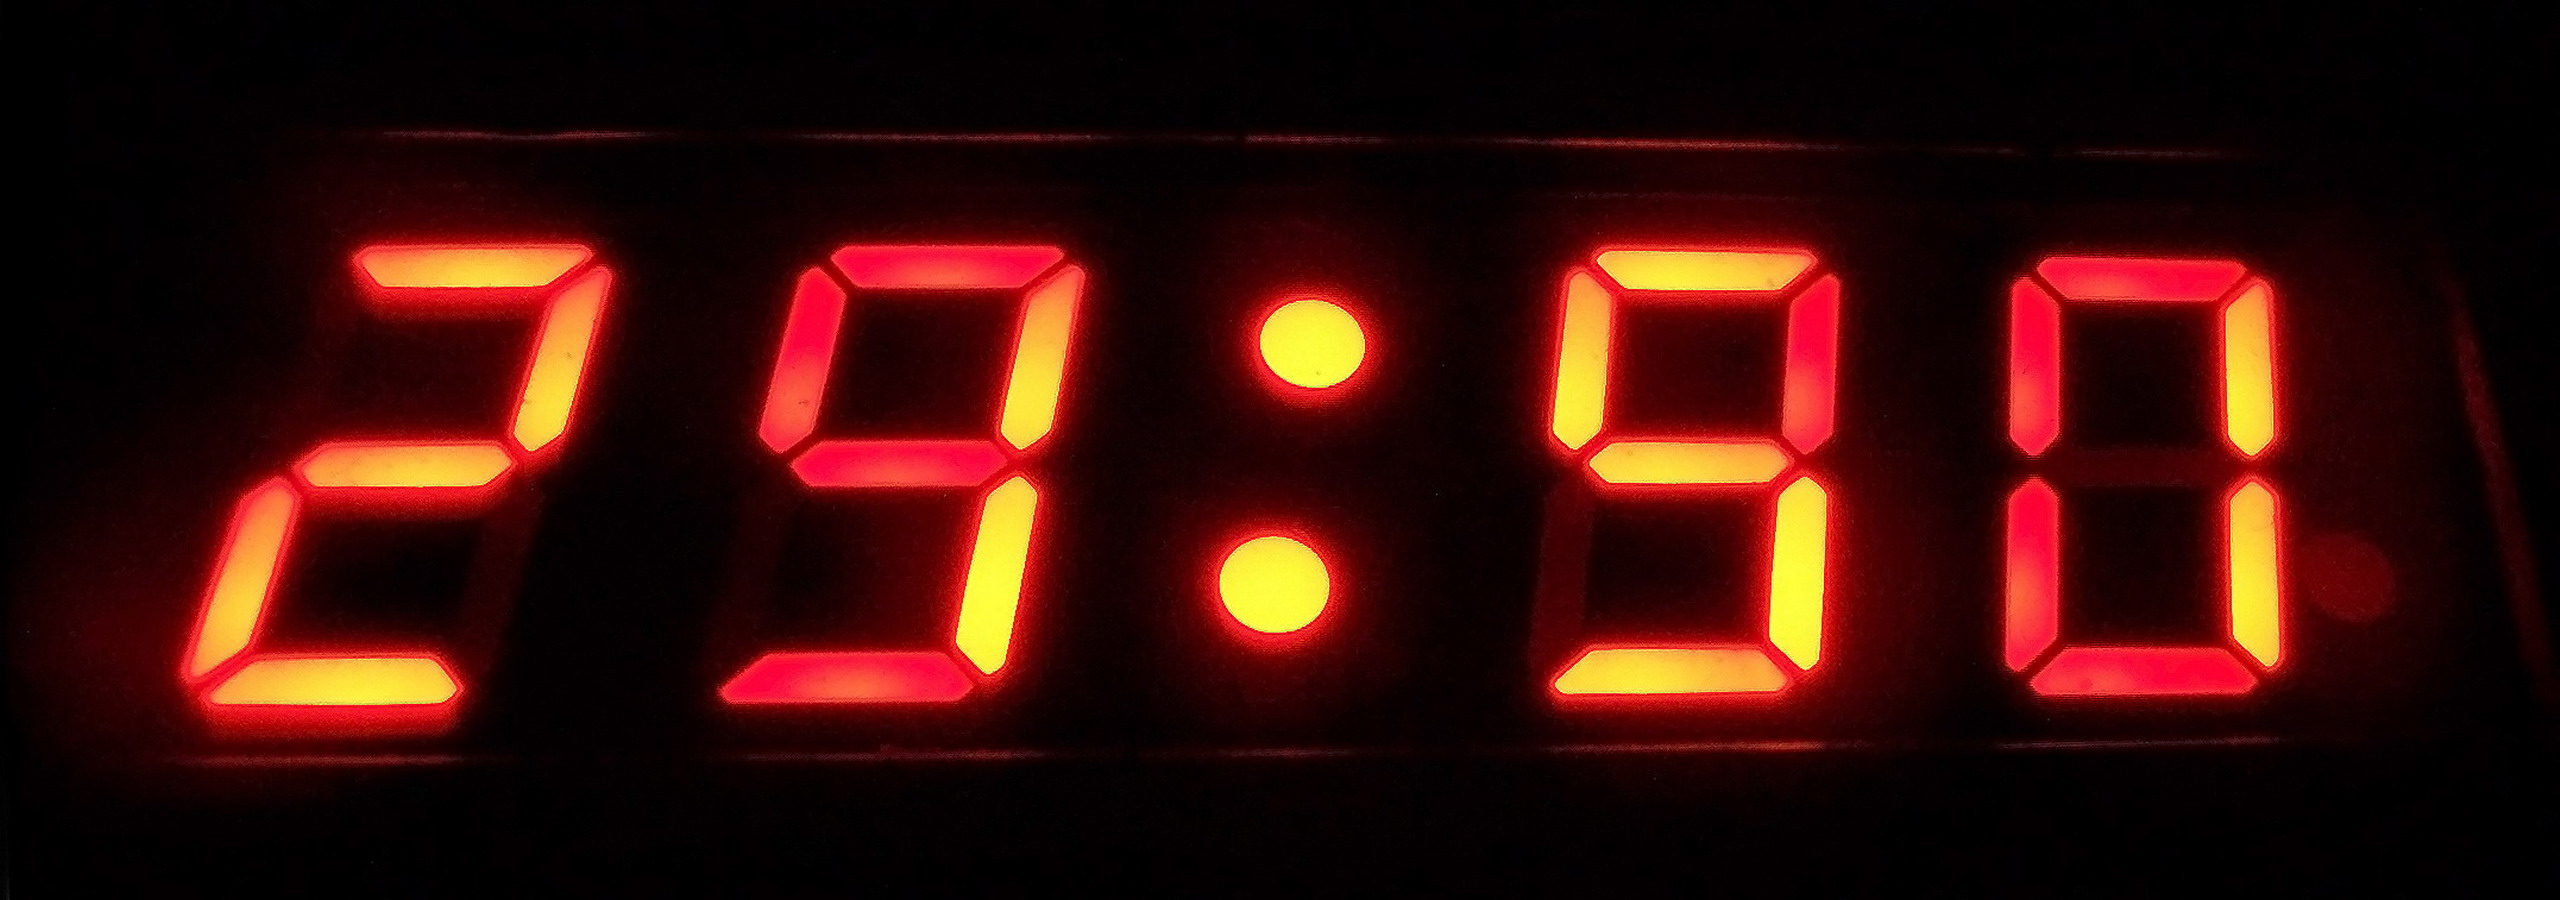 Digital clock changing numbers